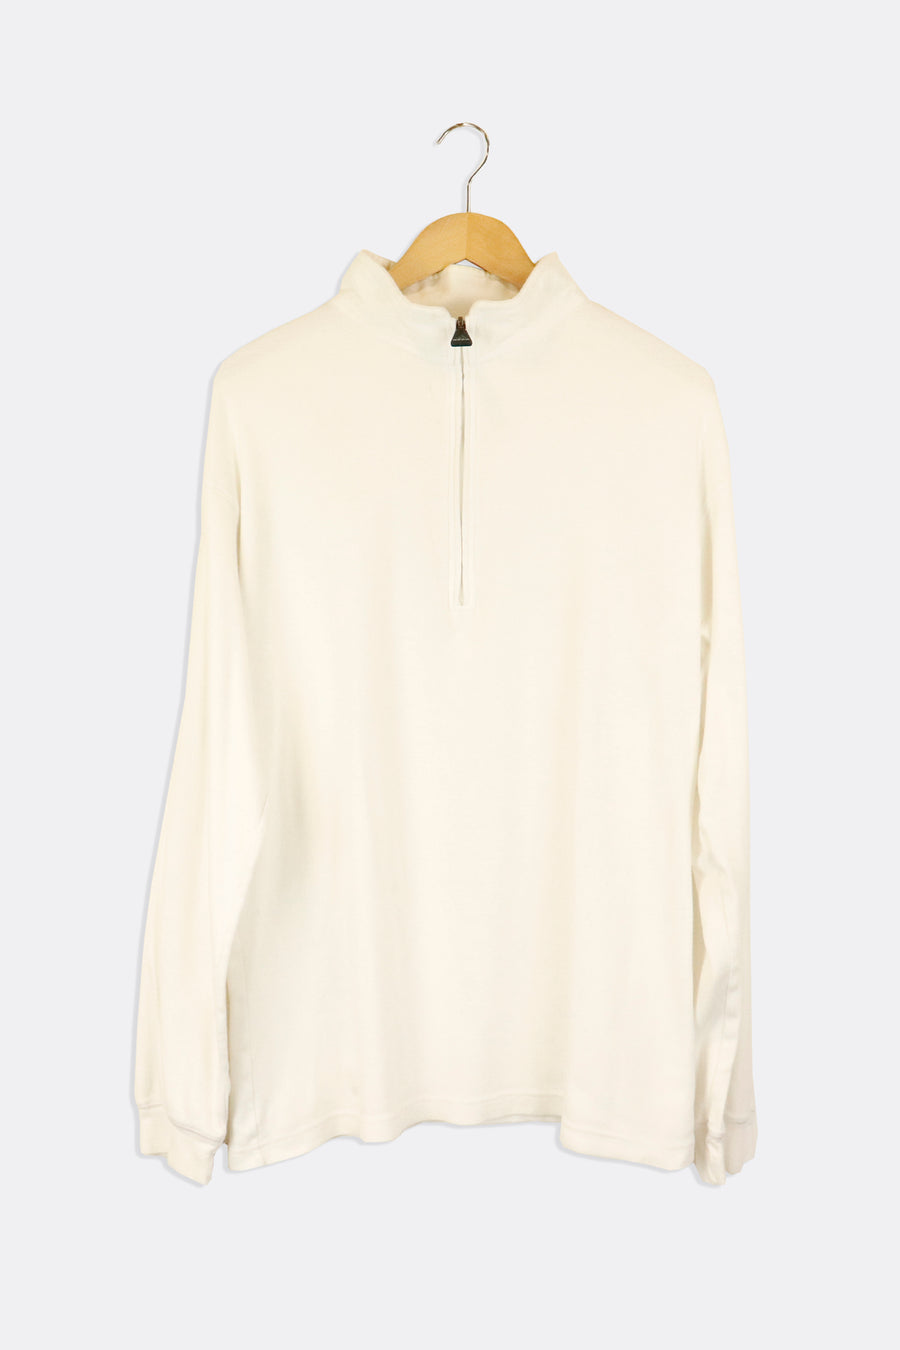 Vintage Adidas Quarter Zip Simple White Sweatshirt Sz L